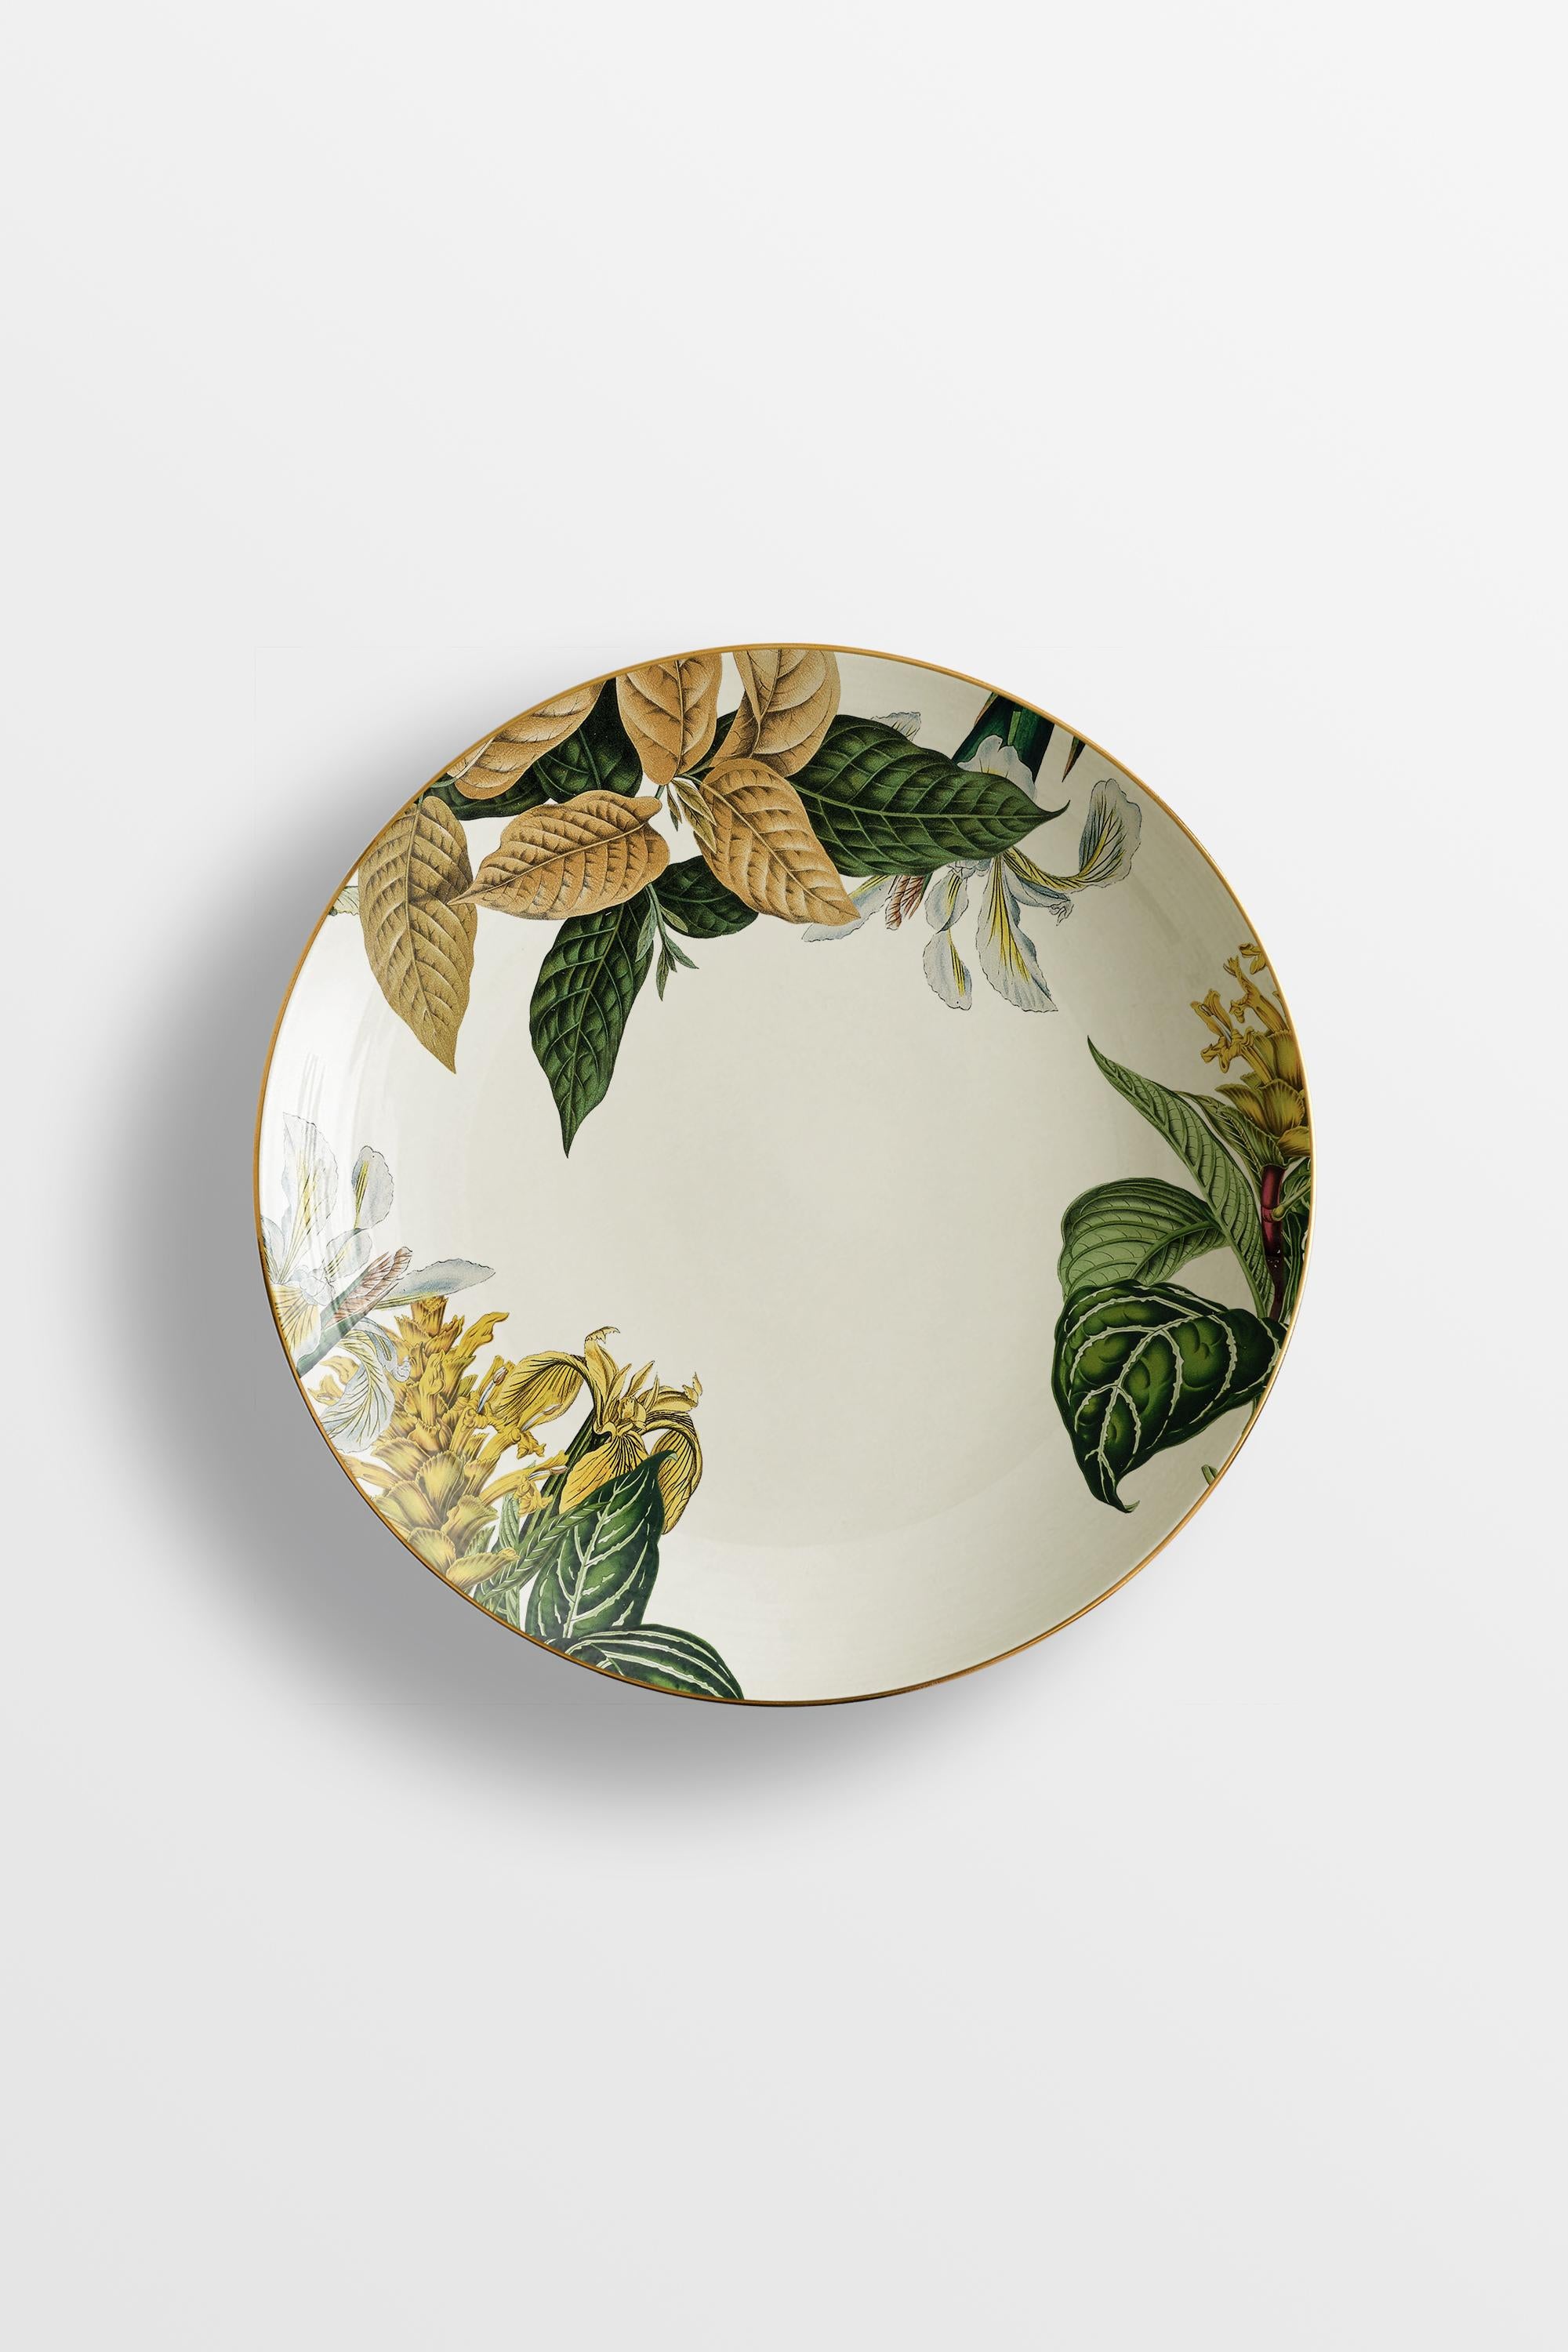 Animalia, Six Contemporary Porcelain Soup Plates with Decorative Design For Sale 2